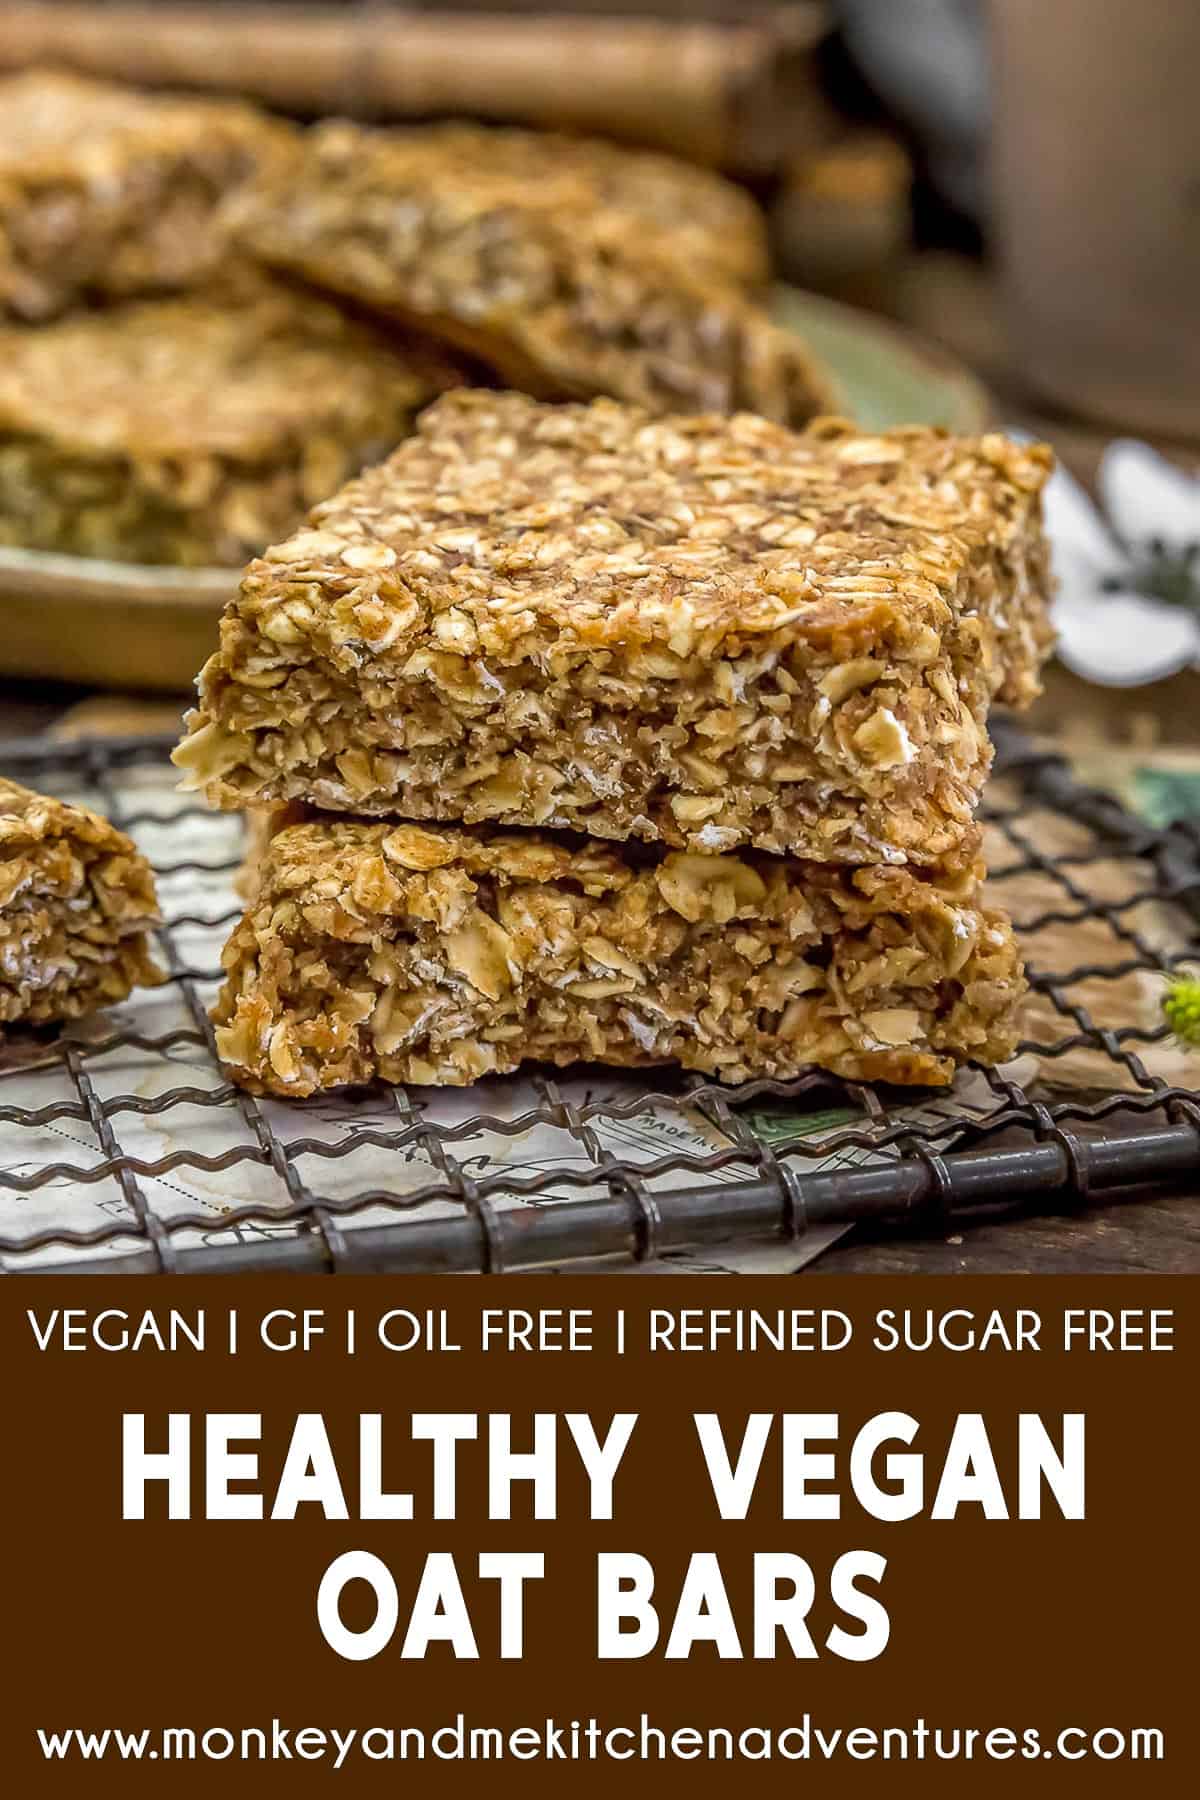 Healthy Vegan Oat Bars with text description